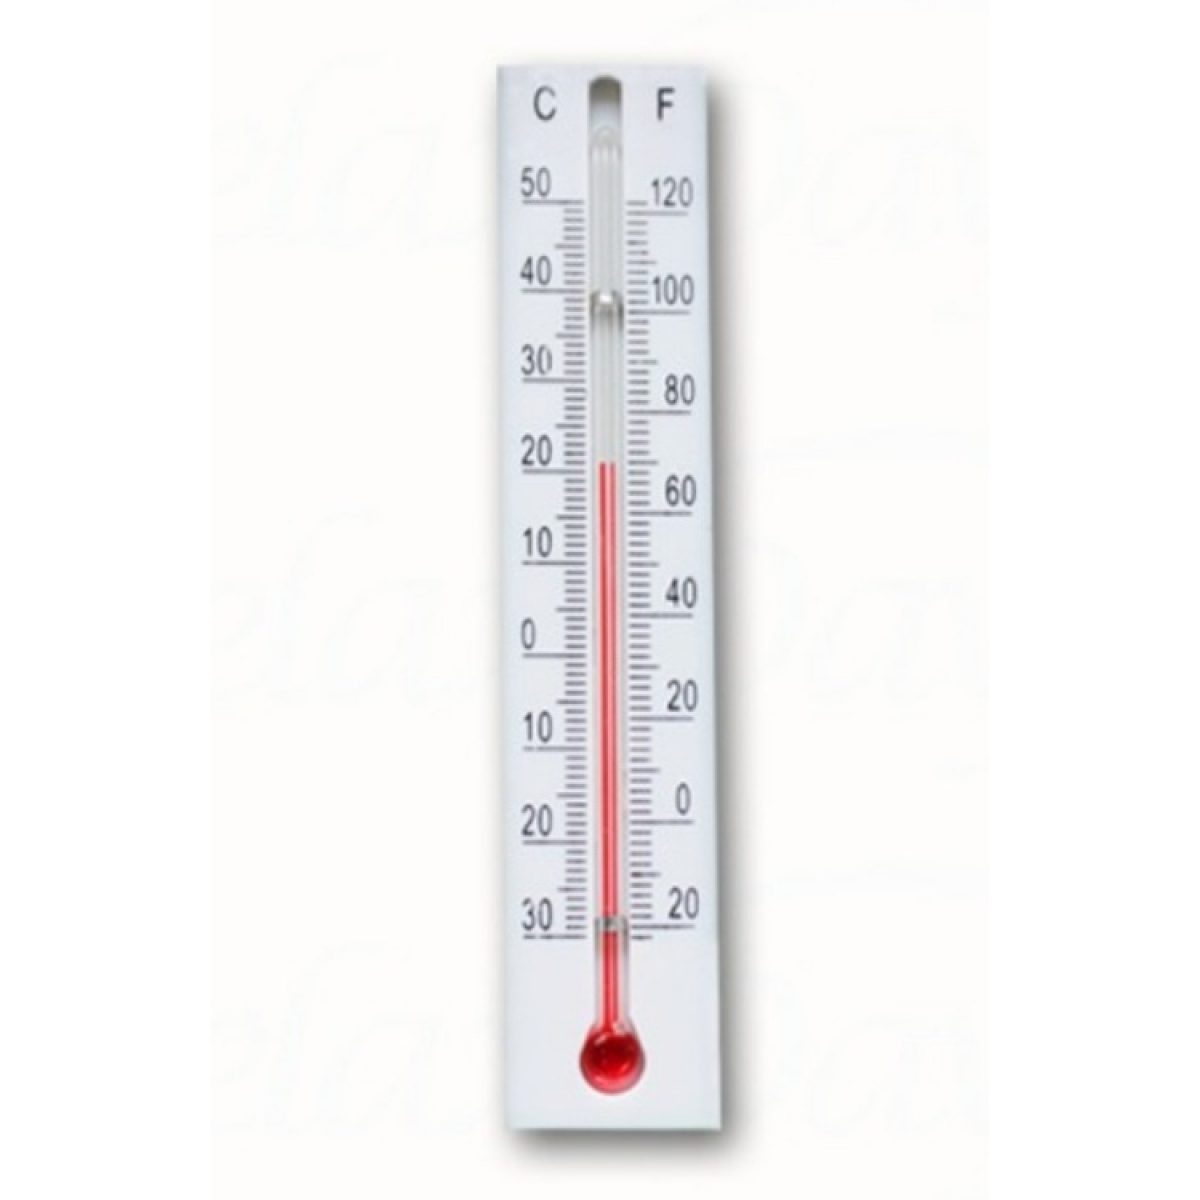 Градусник для земли. Миниатюрный картонный термометр для помещений термометр 30-100 Цельсия. Термометр уличный th70. Термометр разм 250*56*12мм, Deli 9013. Градусная шкала градусника.